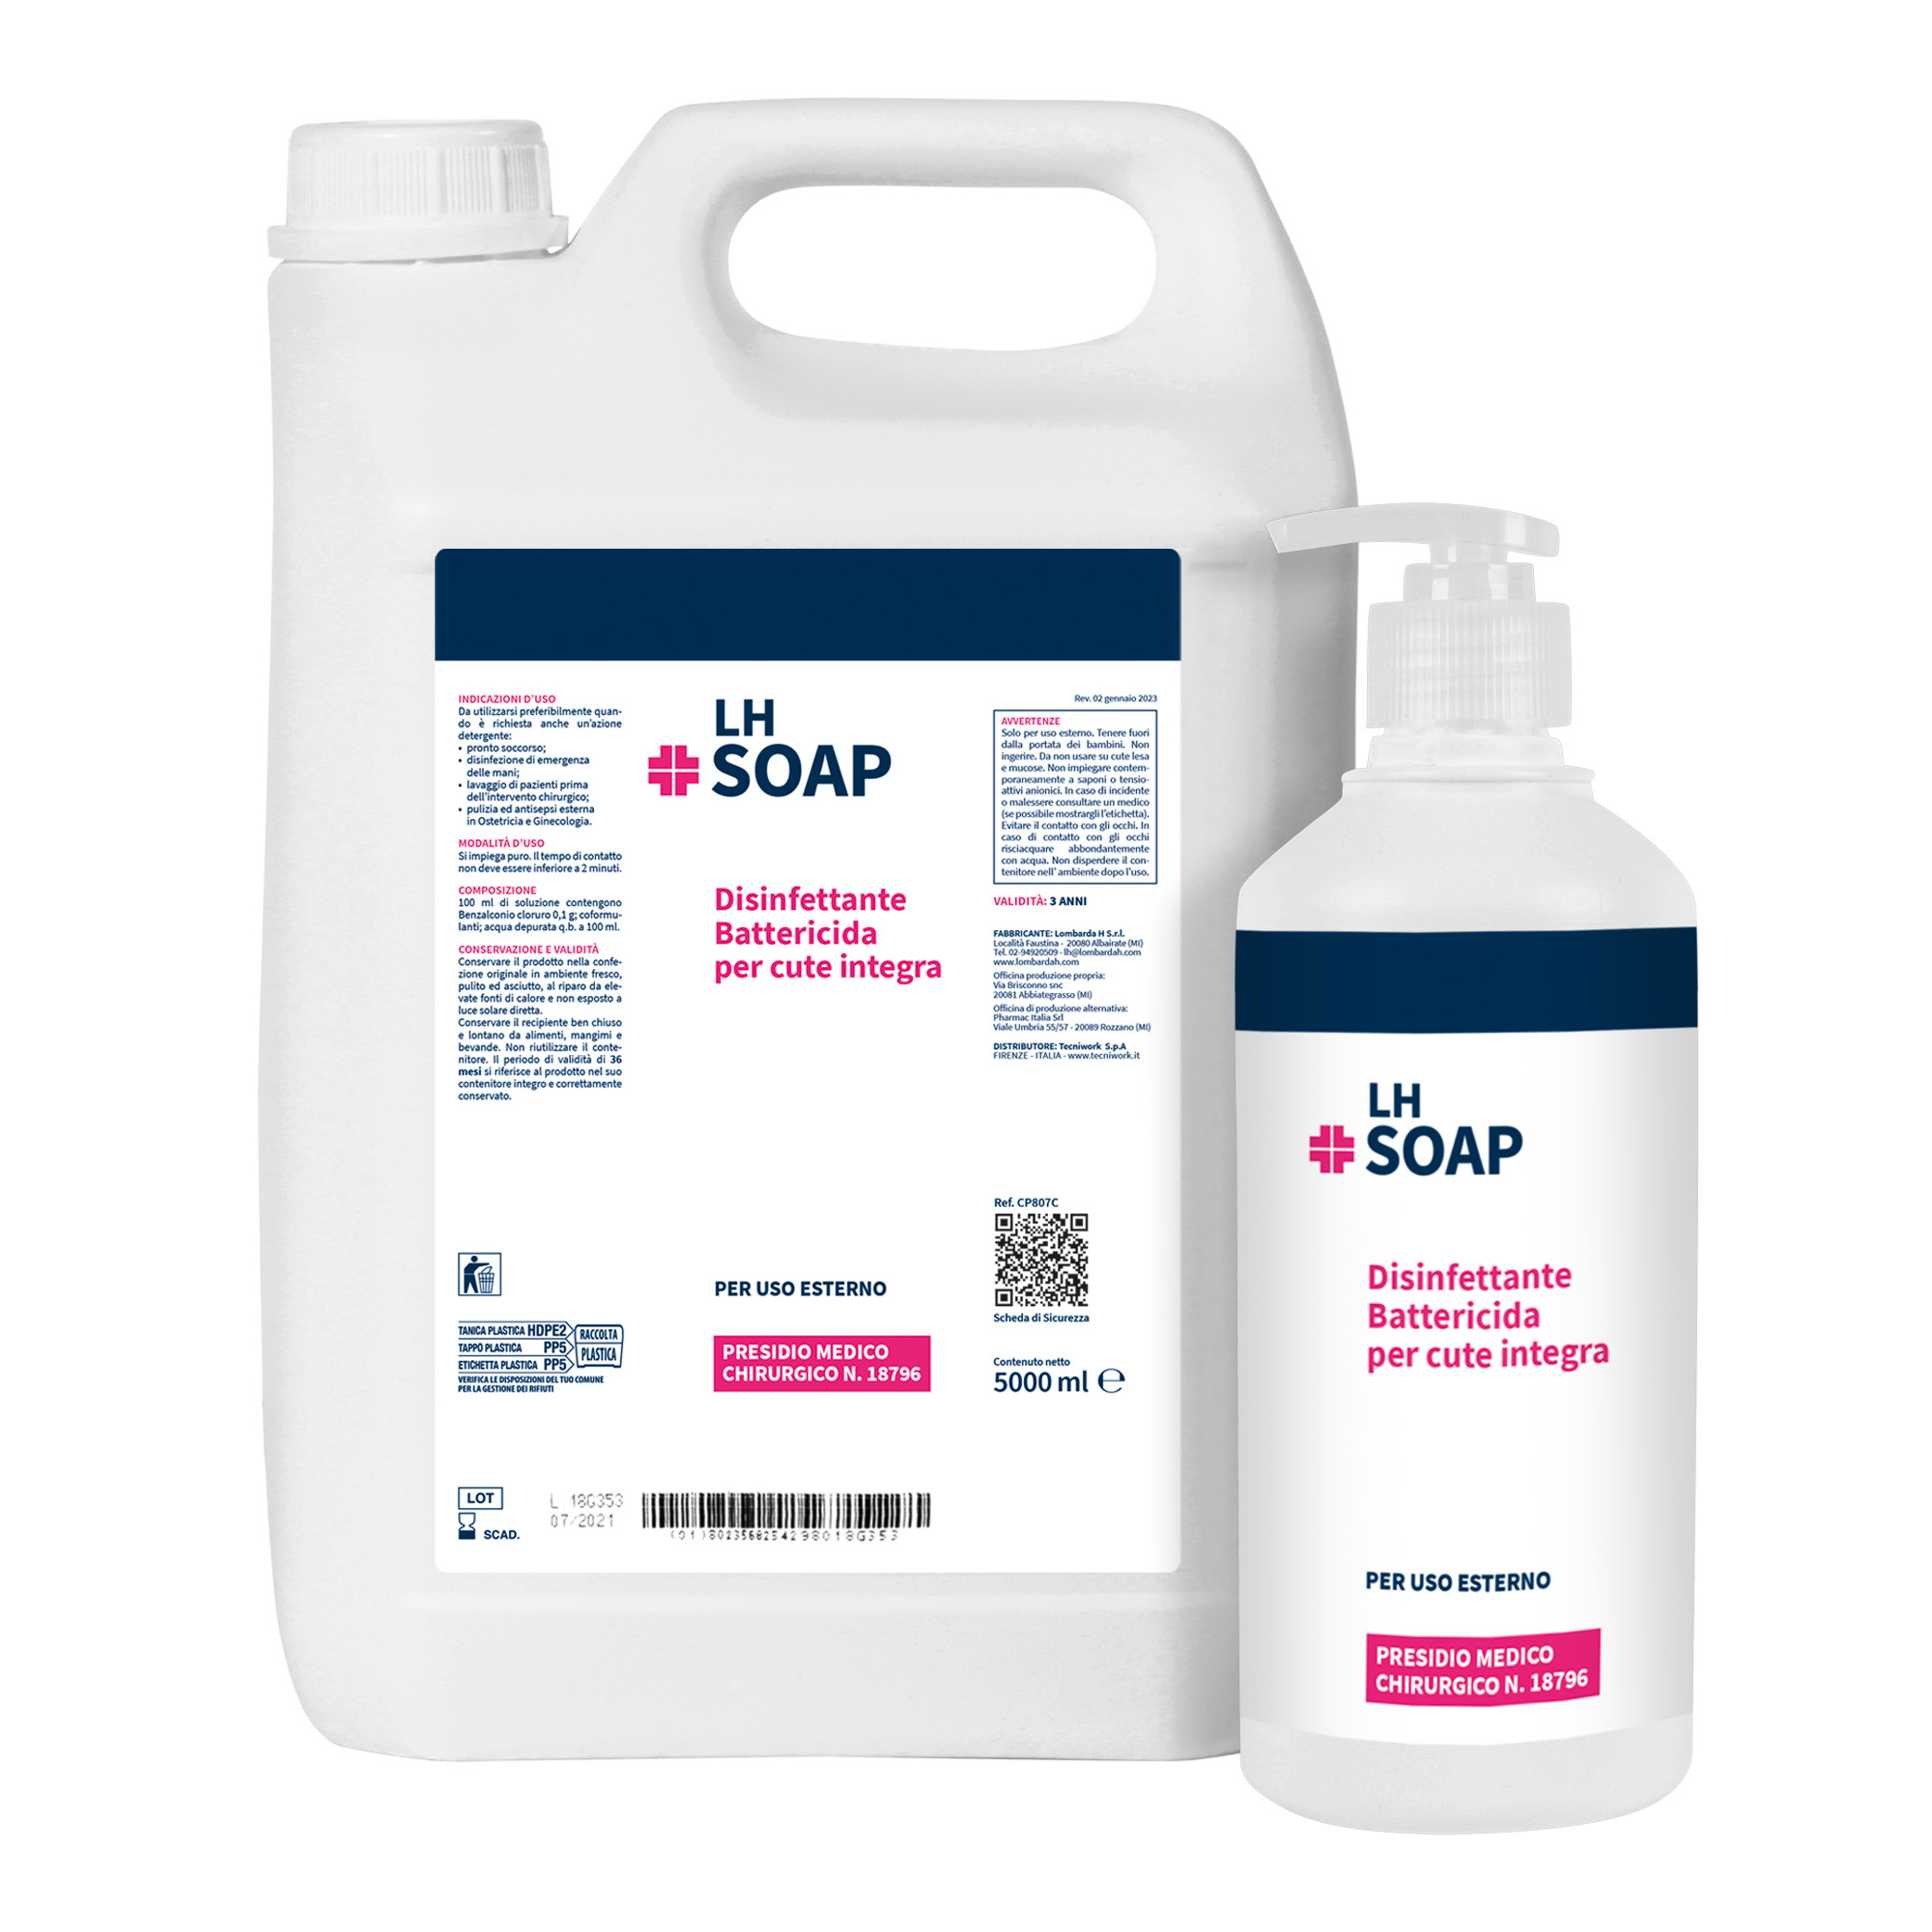 Lh soap sapone disinfettante 500 ml